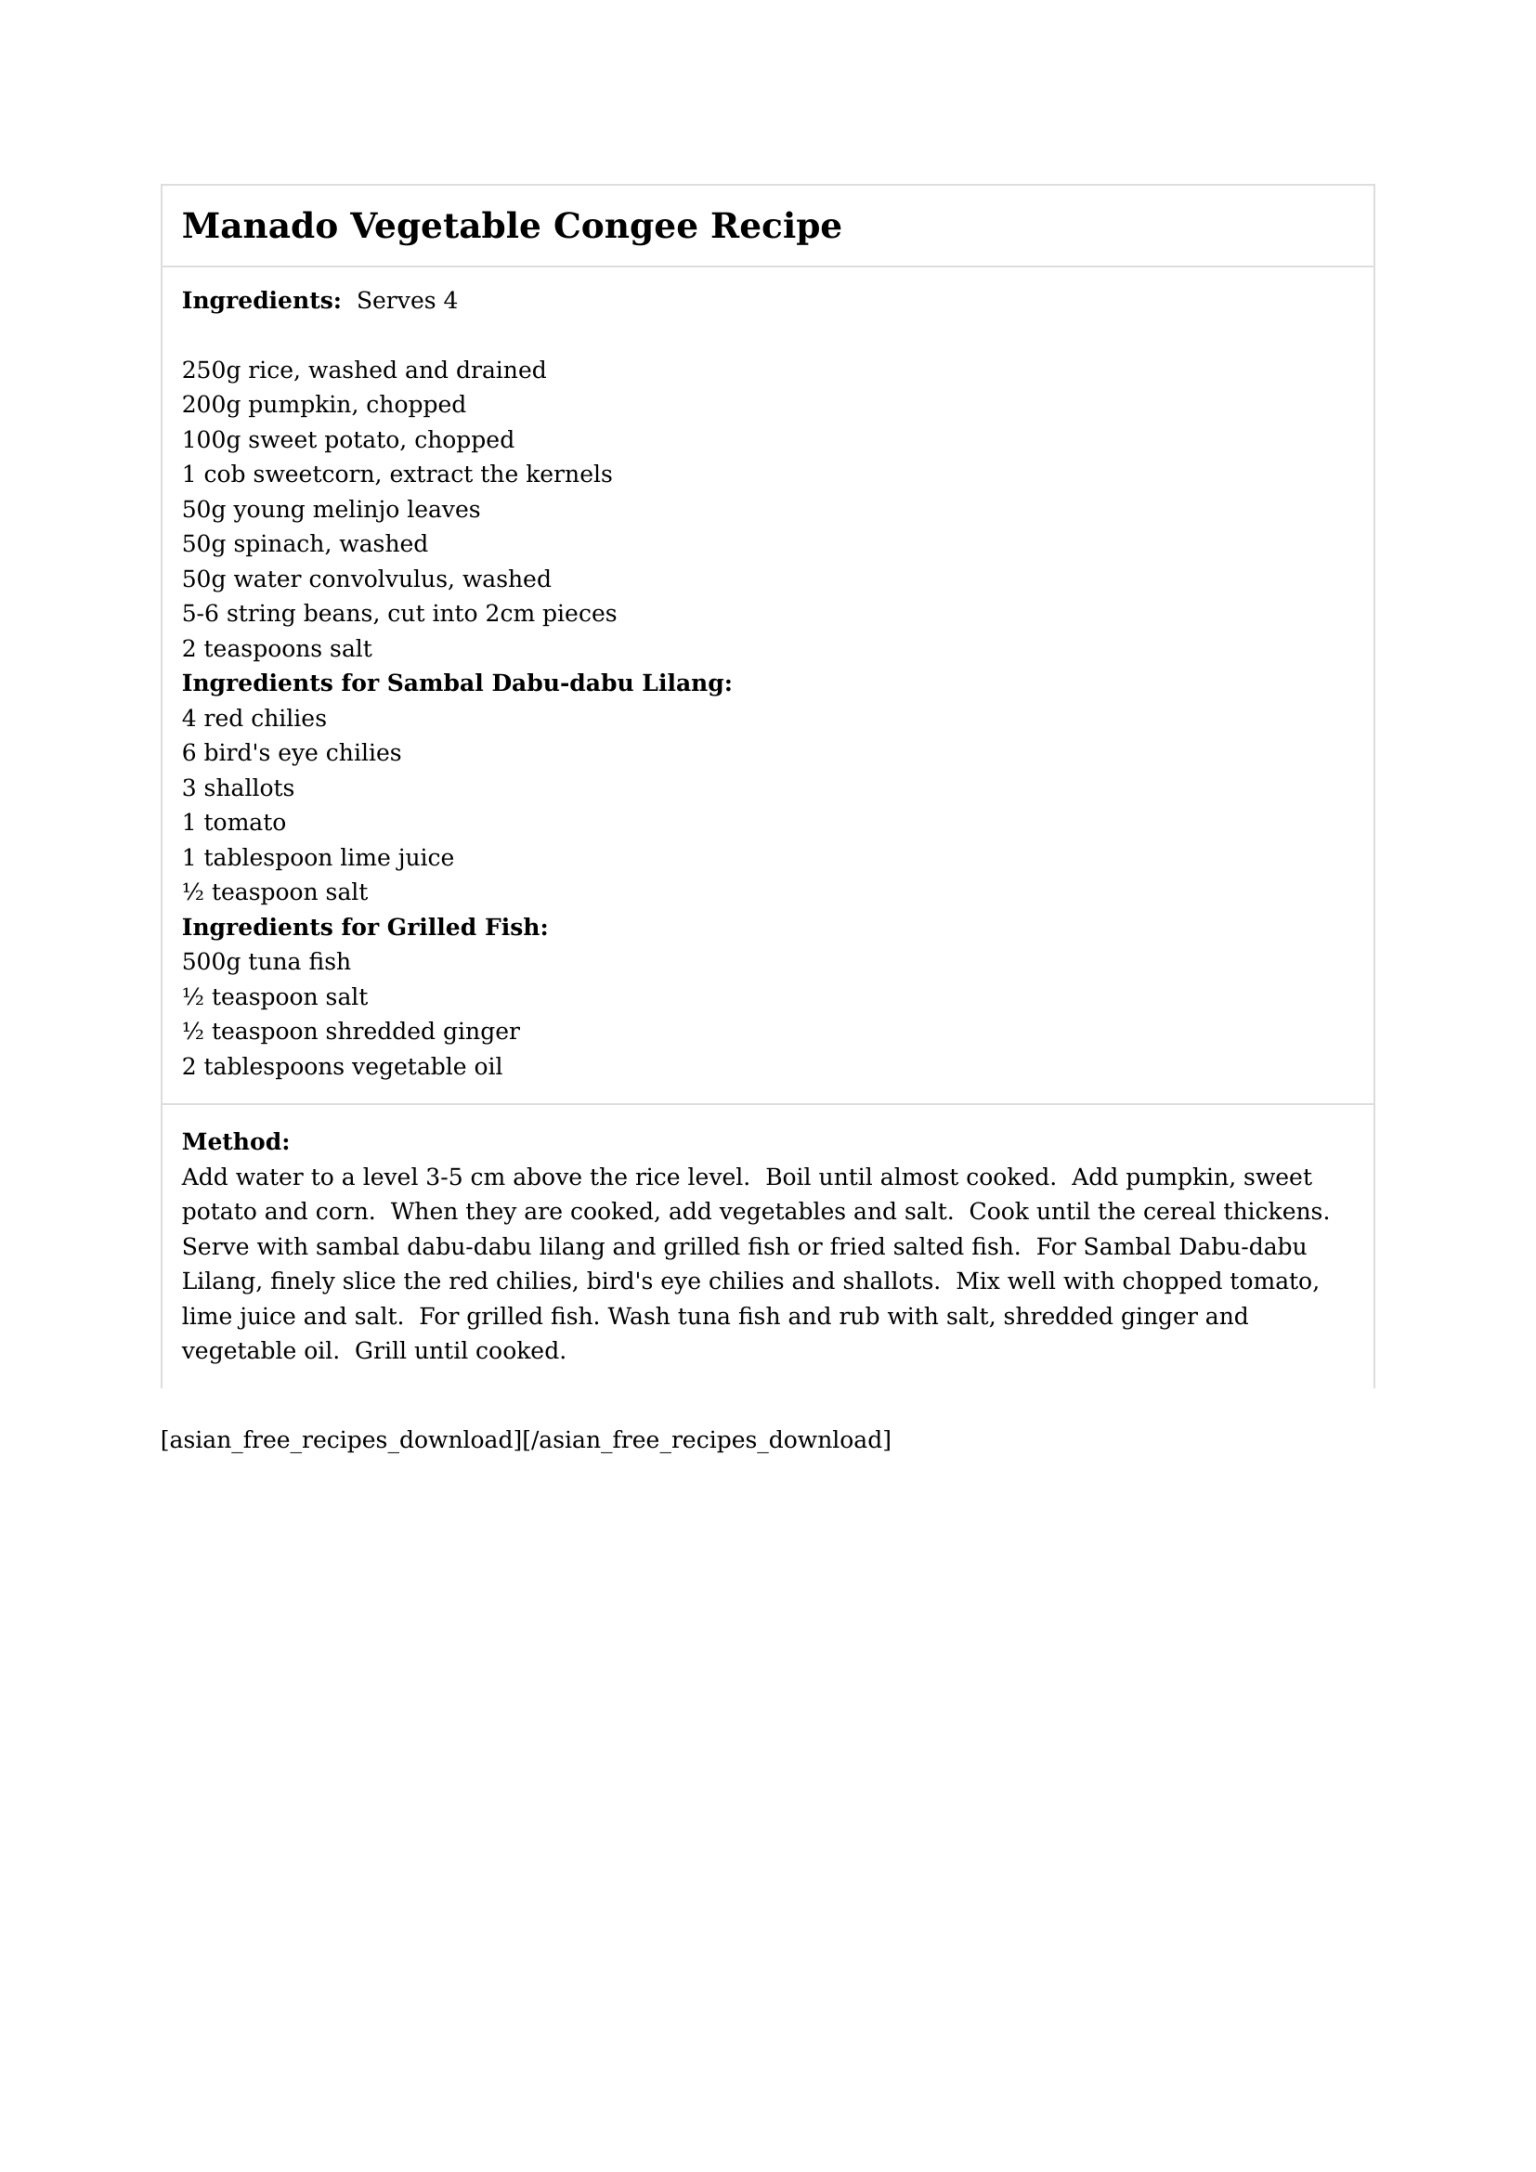 Manado Vegetable Congee Recipe